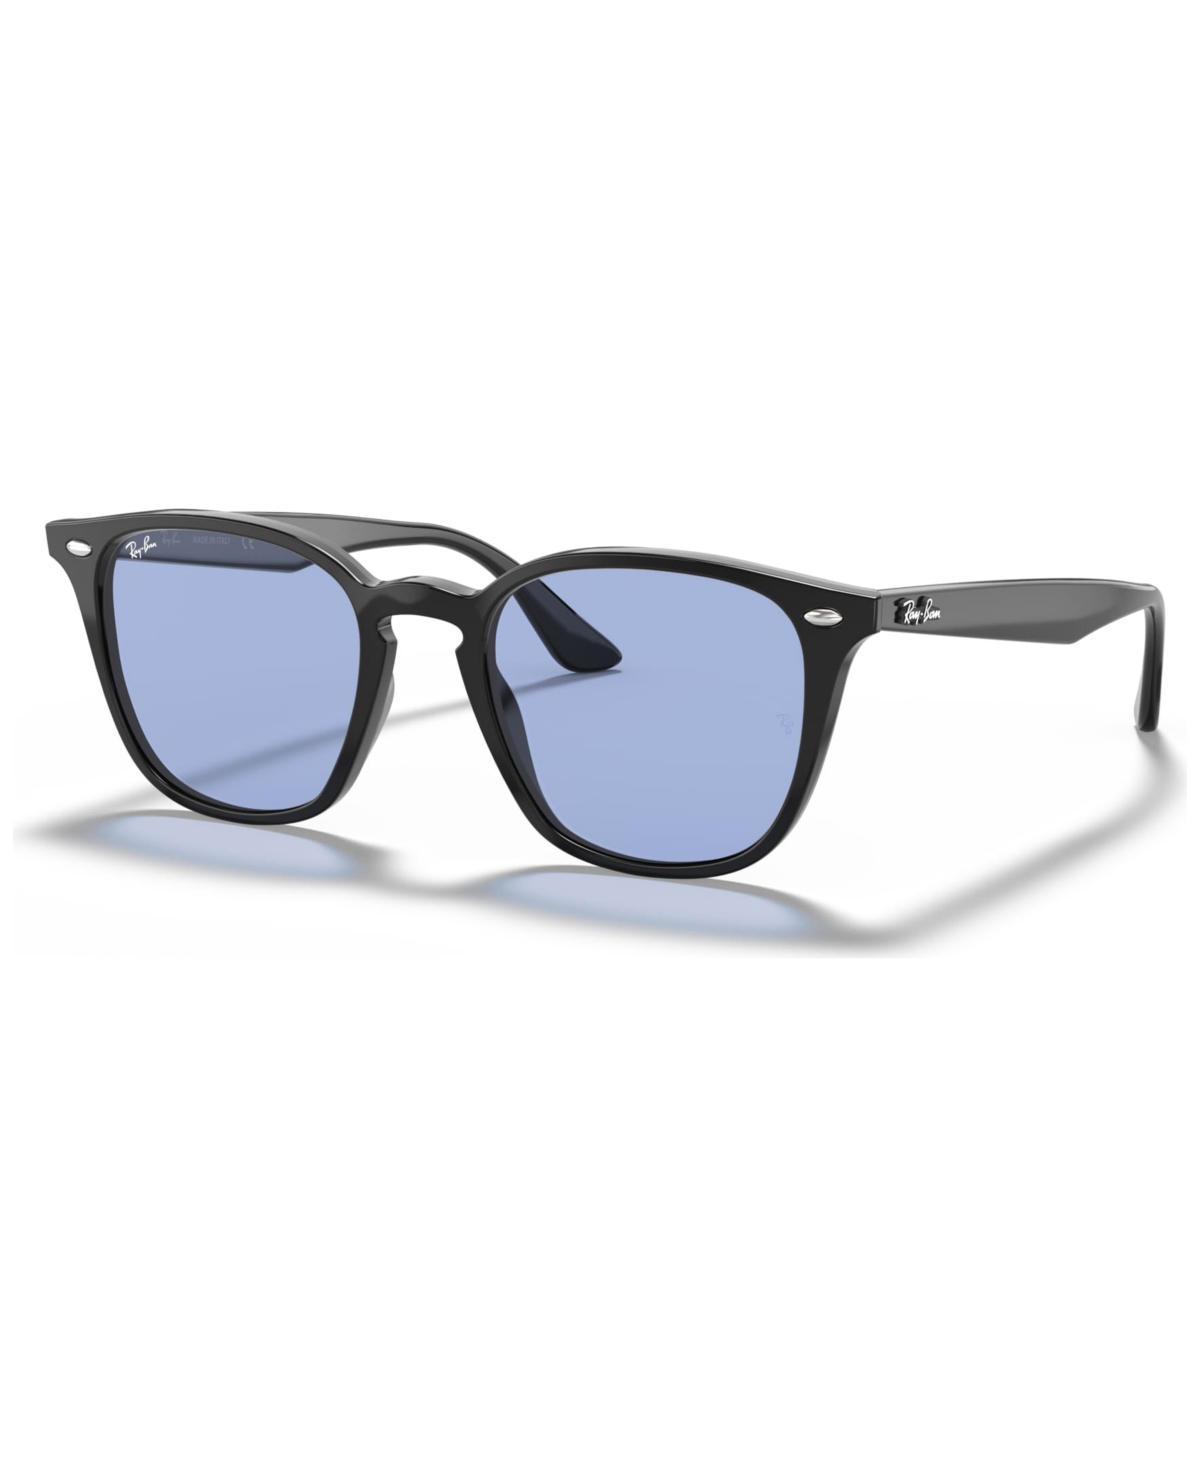 Ray Ban Unisex Low Bridge Fit Sunglasses, Rb4259f 53 In Black